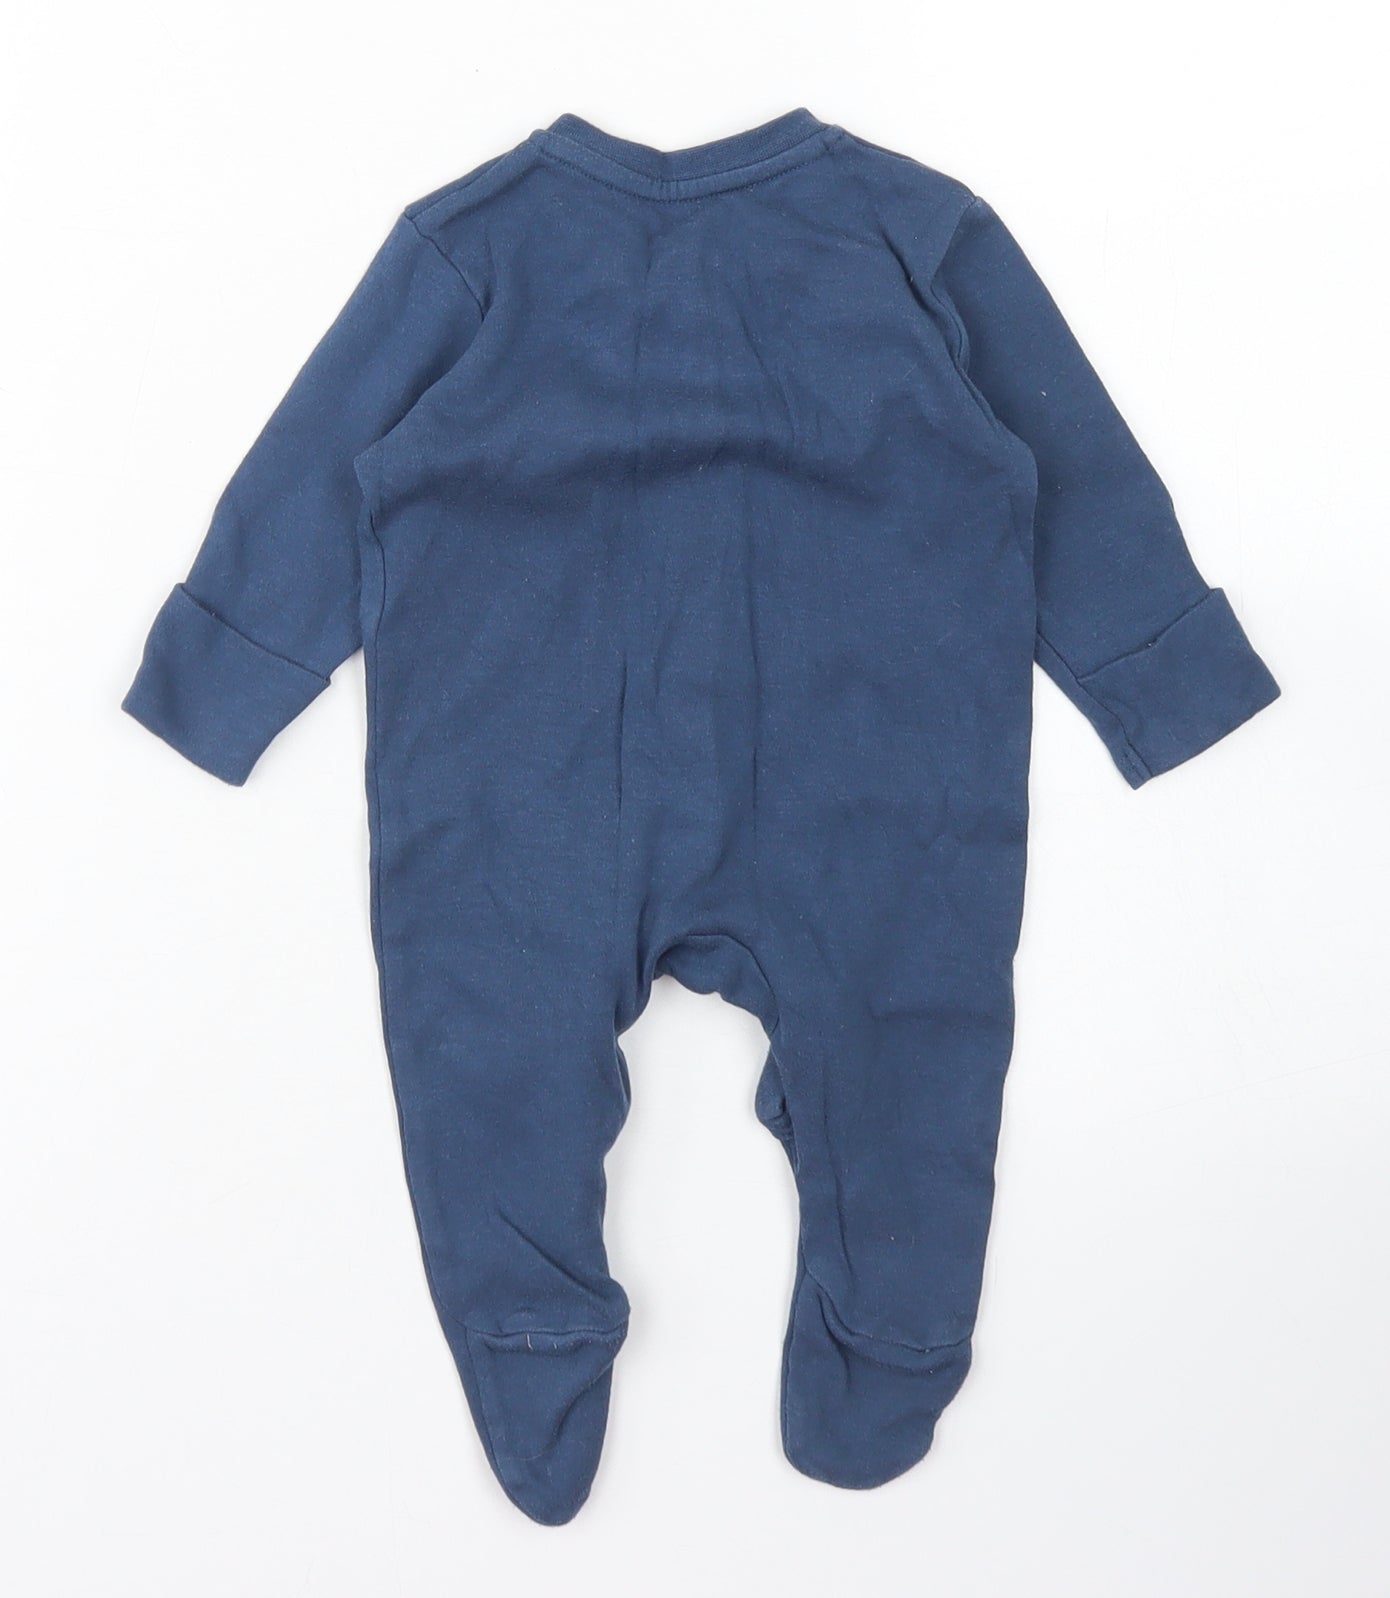 Earlydays Boys Blue  Cotton Babygrow One-Piece Size 0-3 Months  Snap - Dinosaur